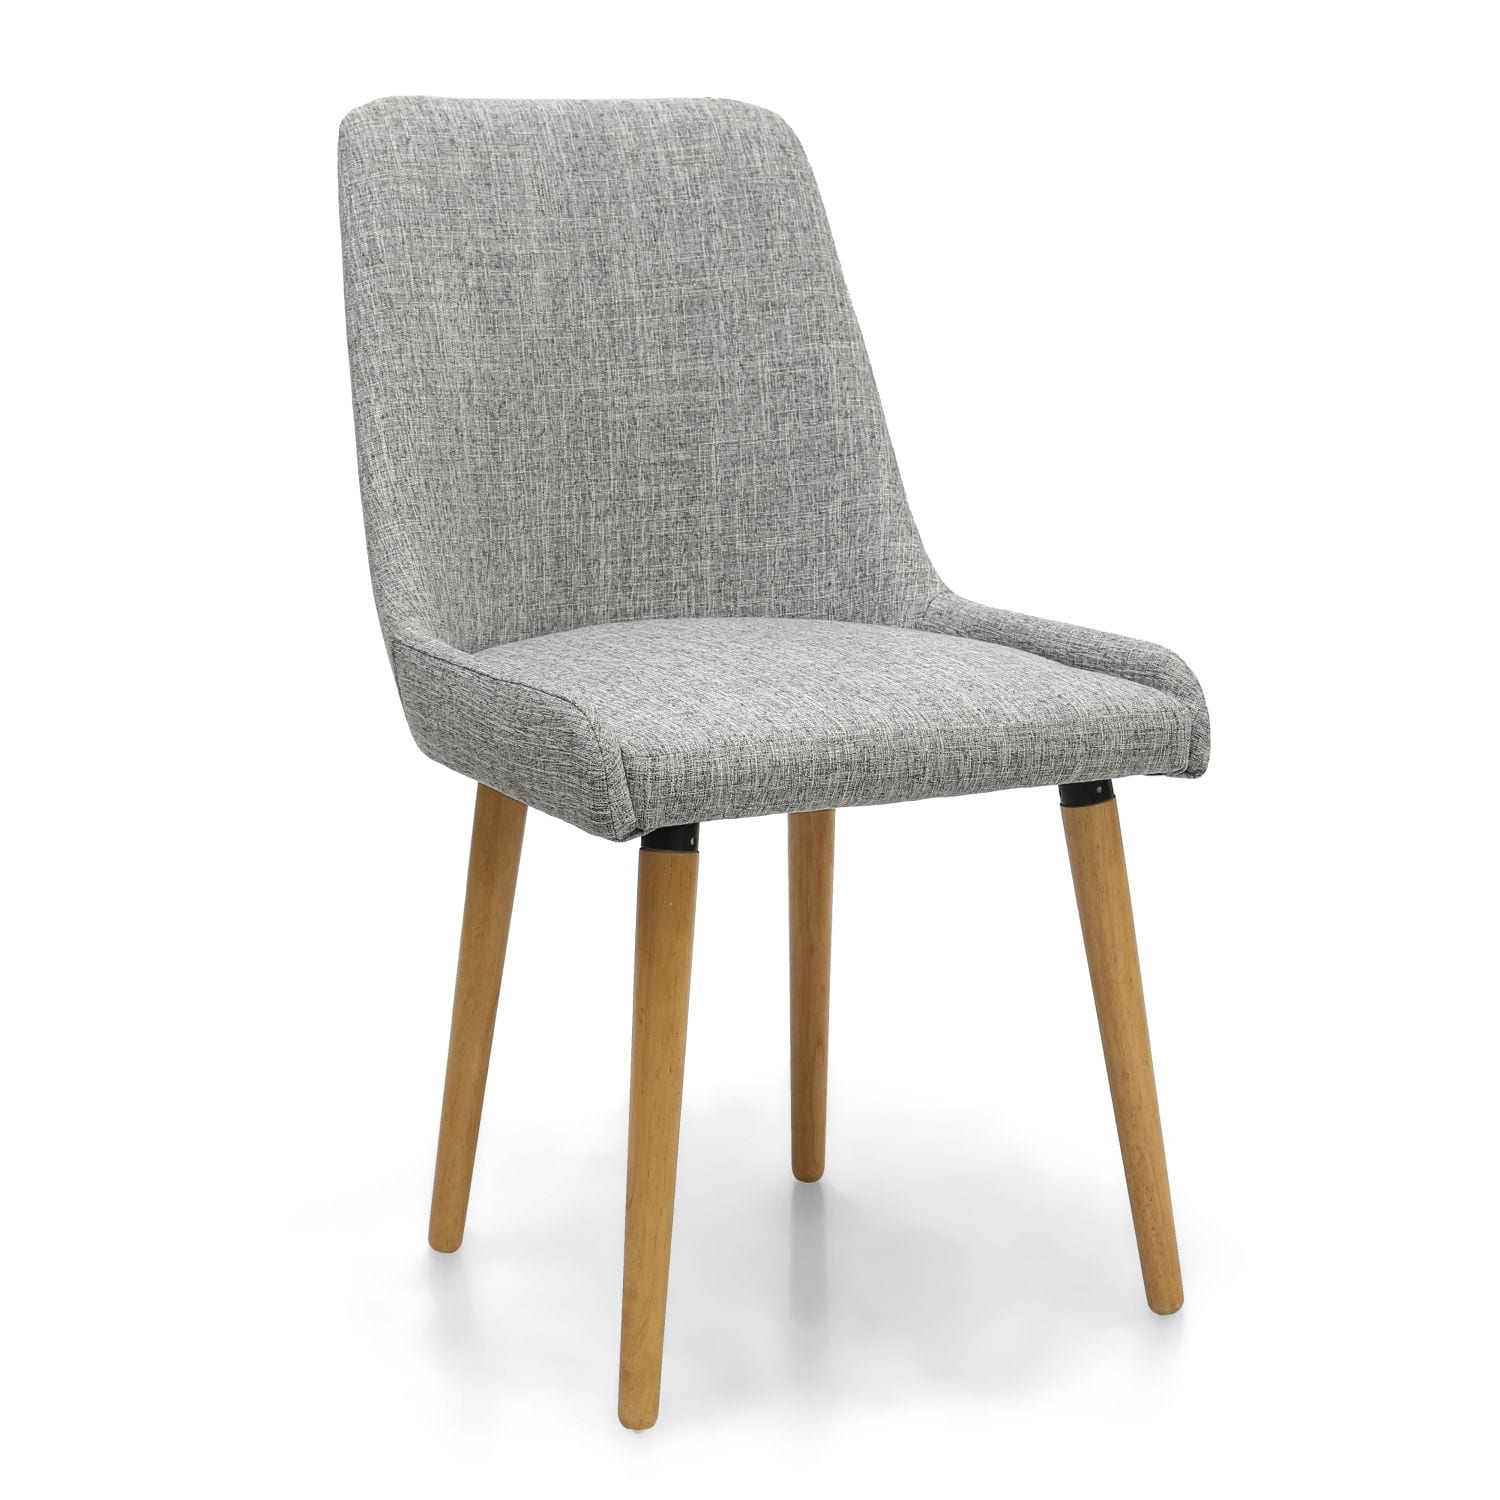 CapriCorisn Flax Effect Grey Weave Chair